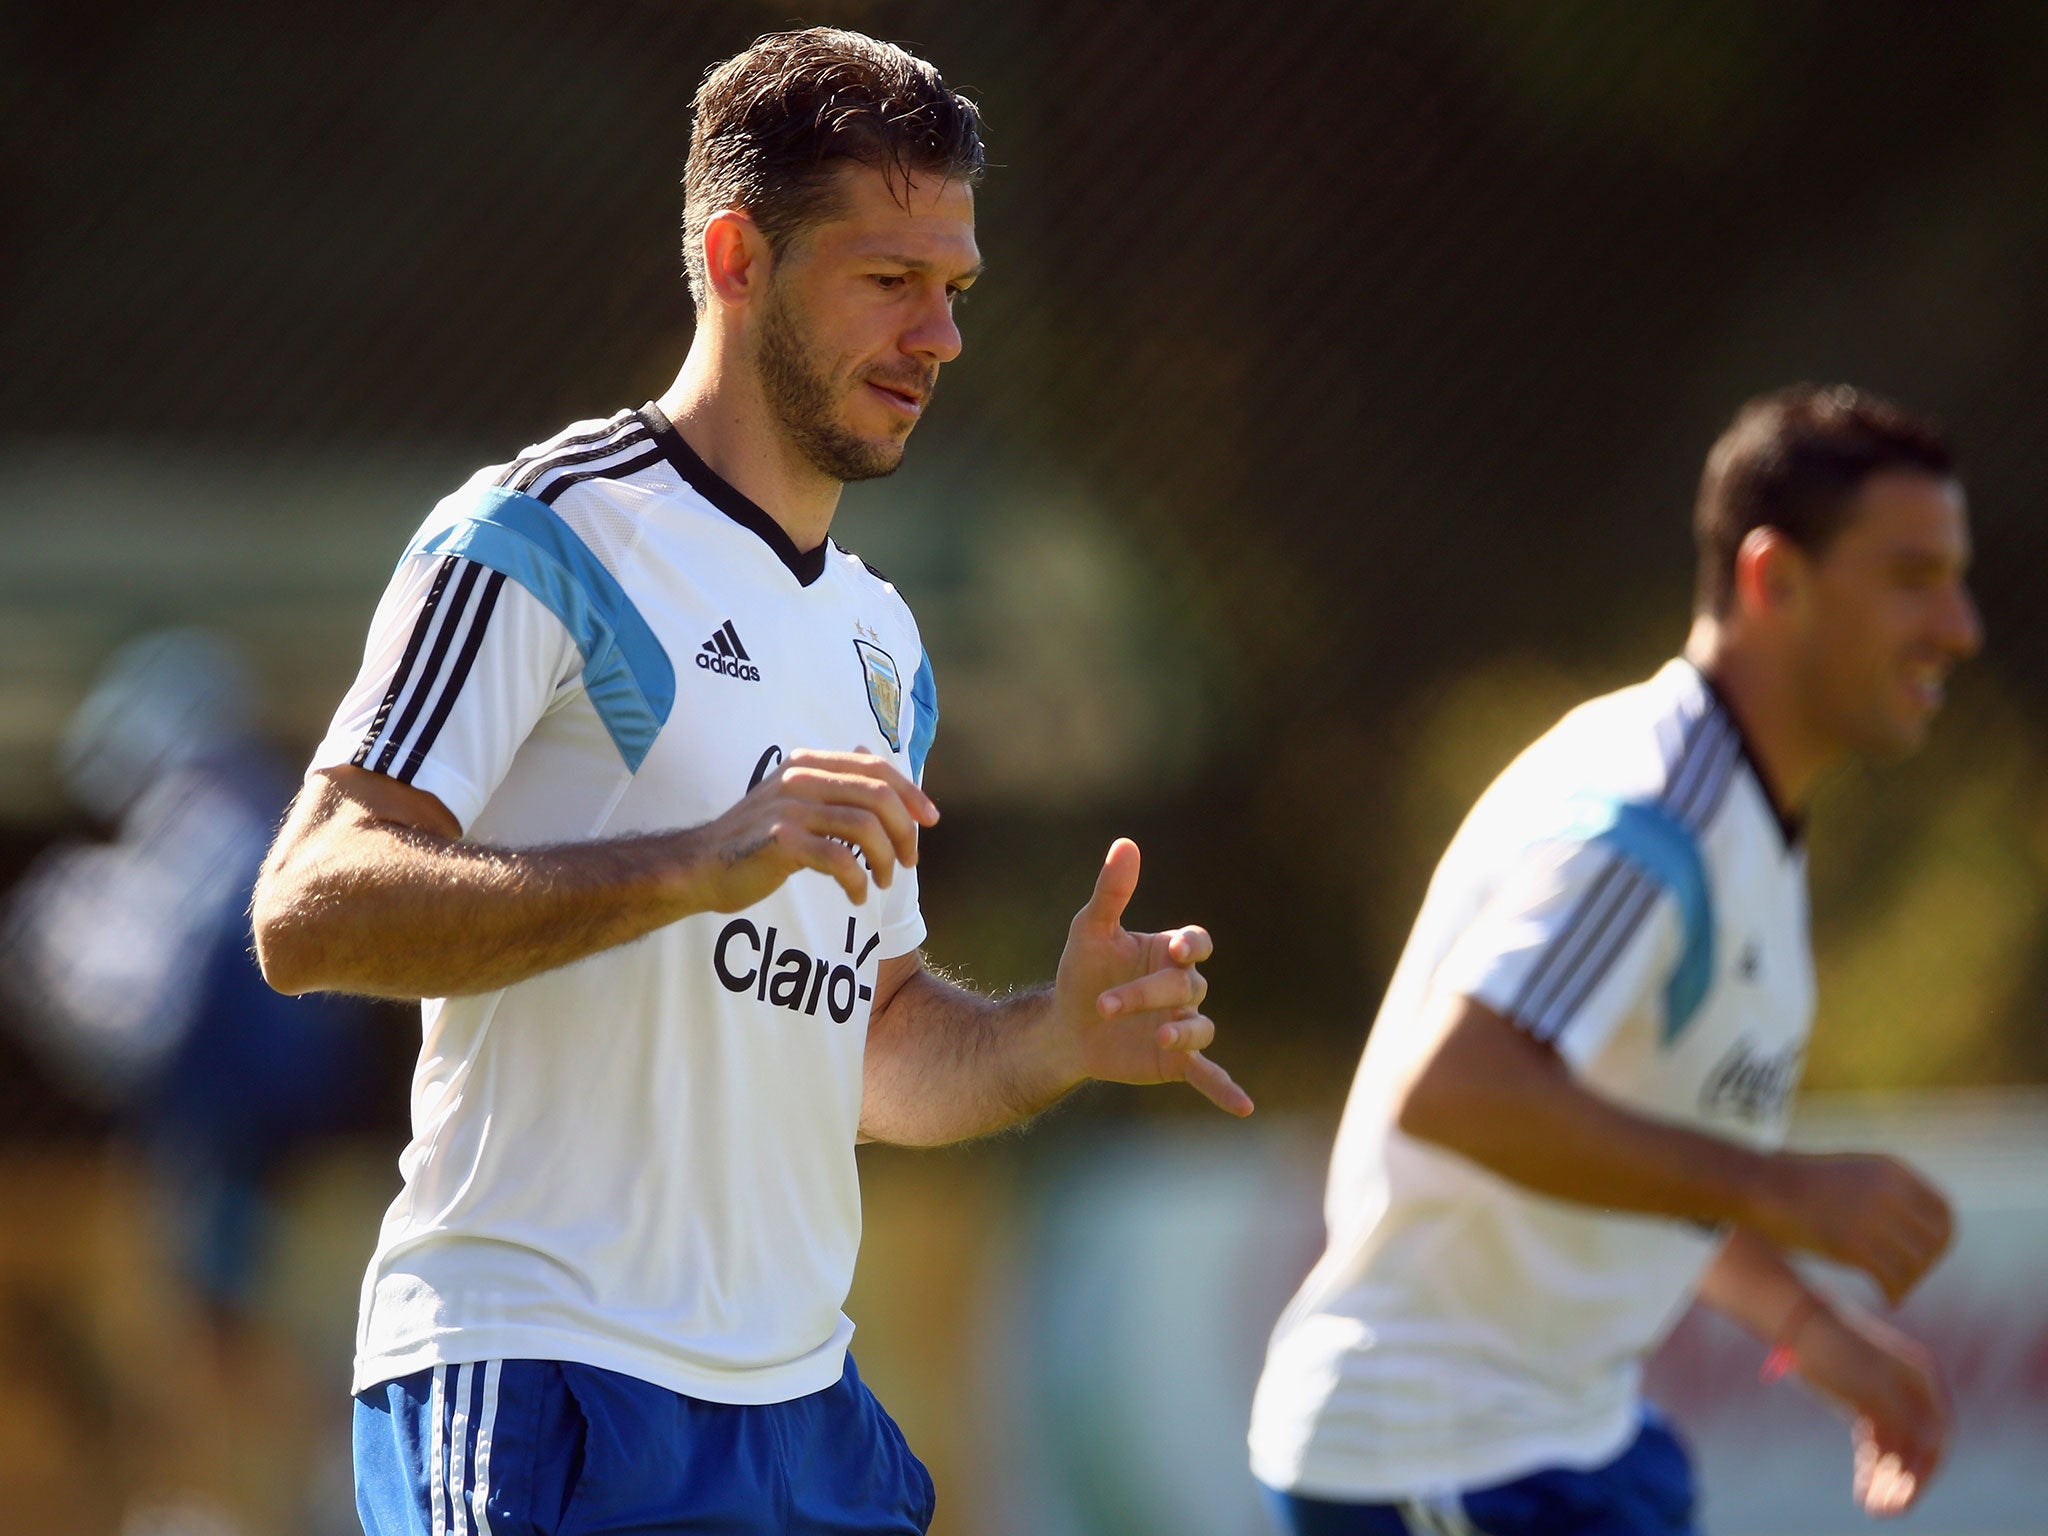 Martin Demichelis will start against Belgium for Argentina